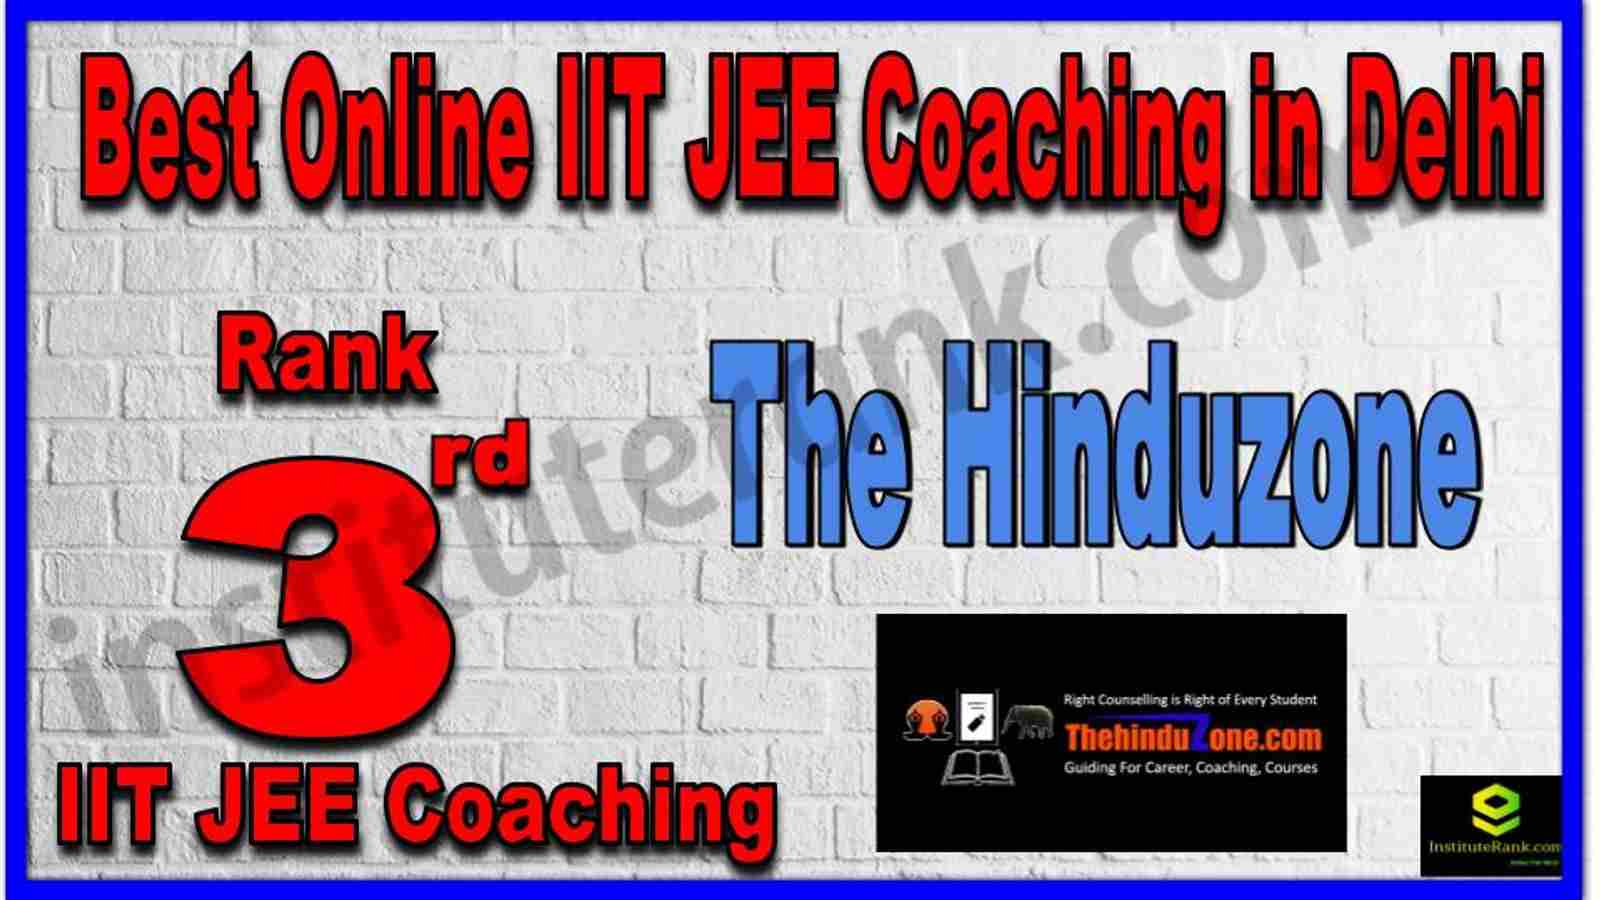 Rank 3rd Best Online IIT JEE Coaching in Delhi